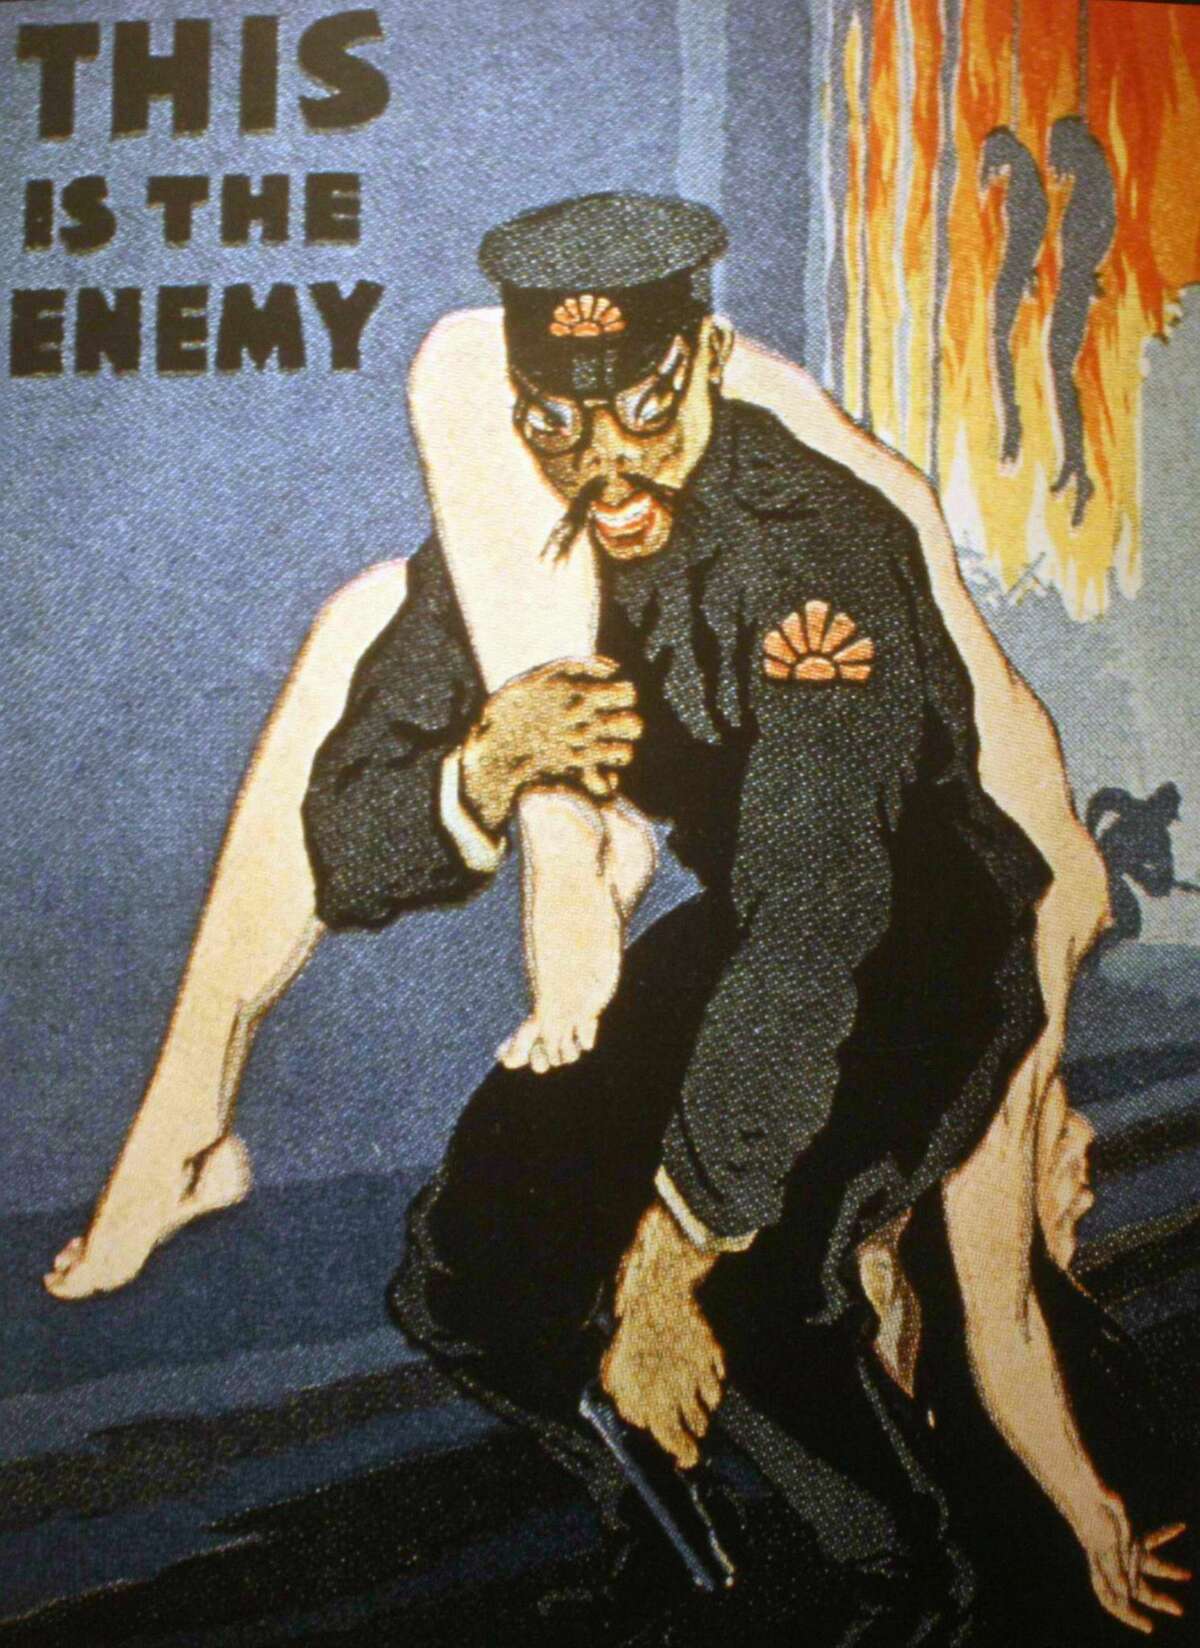 Photos U S Propaganda Art Posters Of World War Ii